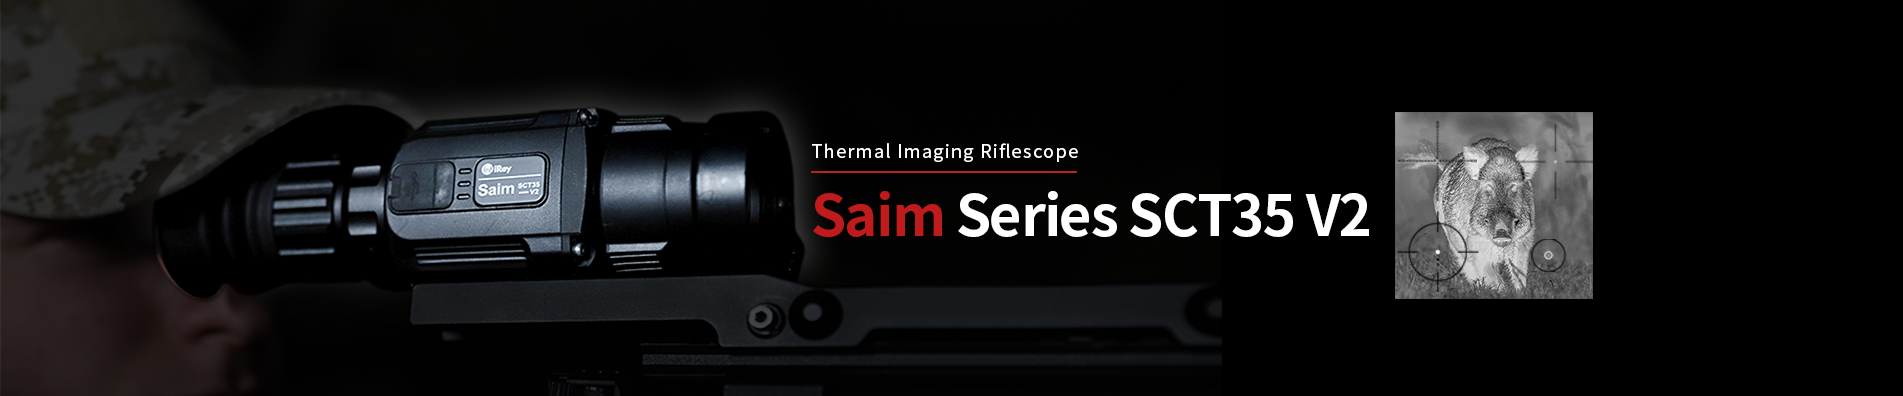 Thermal Imaging Rifle Scope Saim SCT35 V2